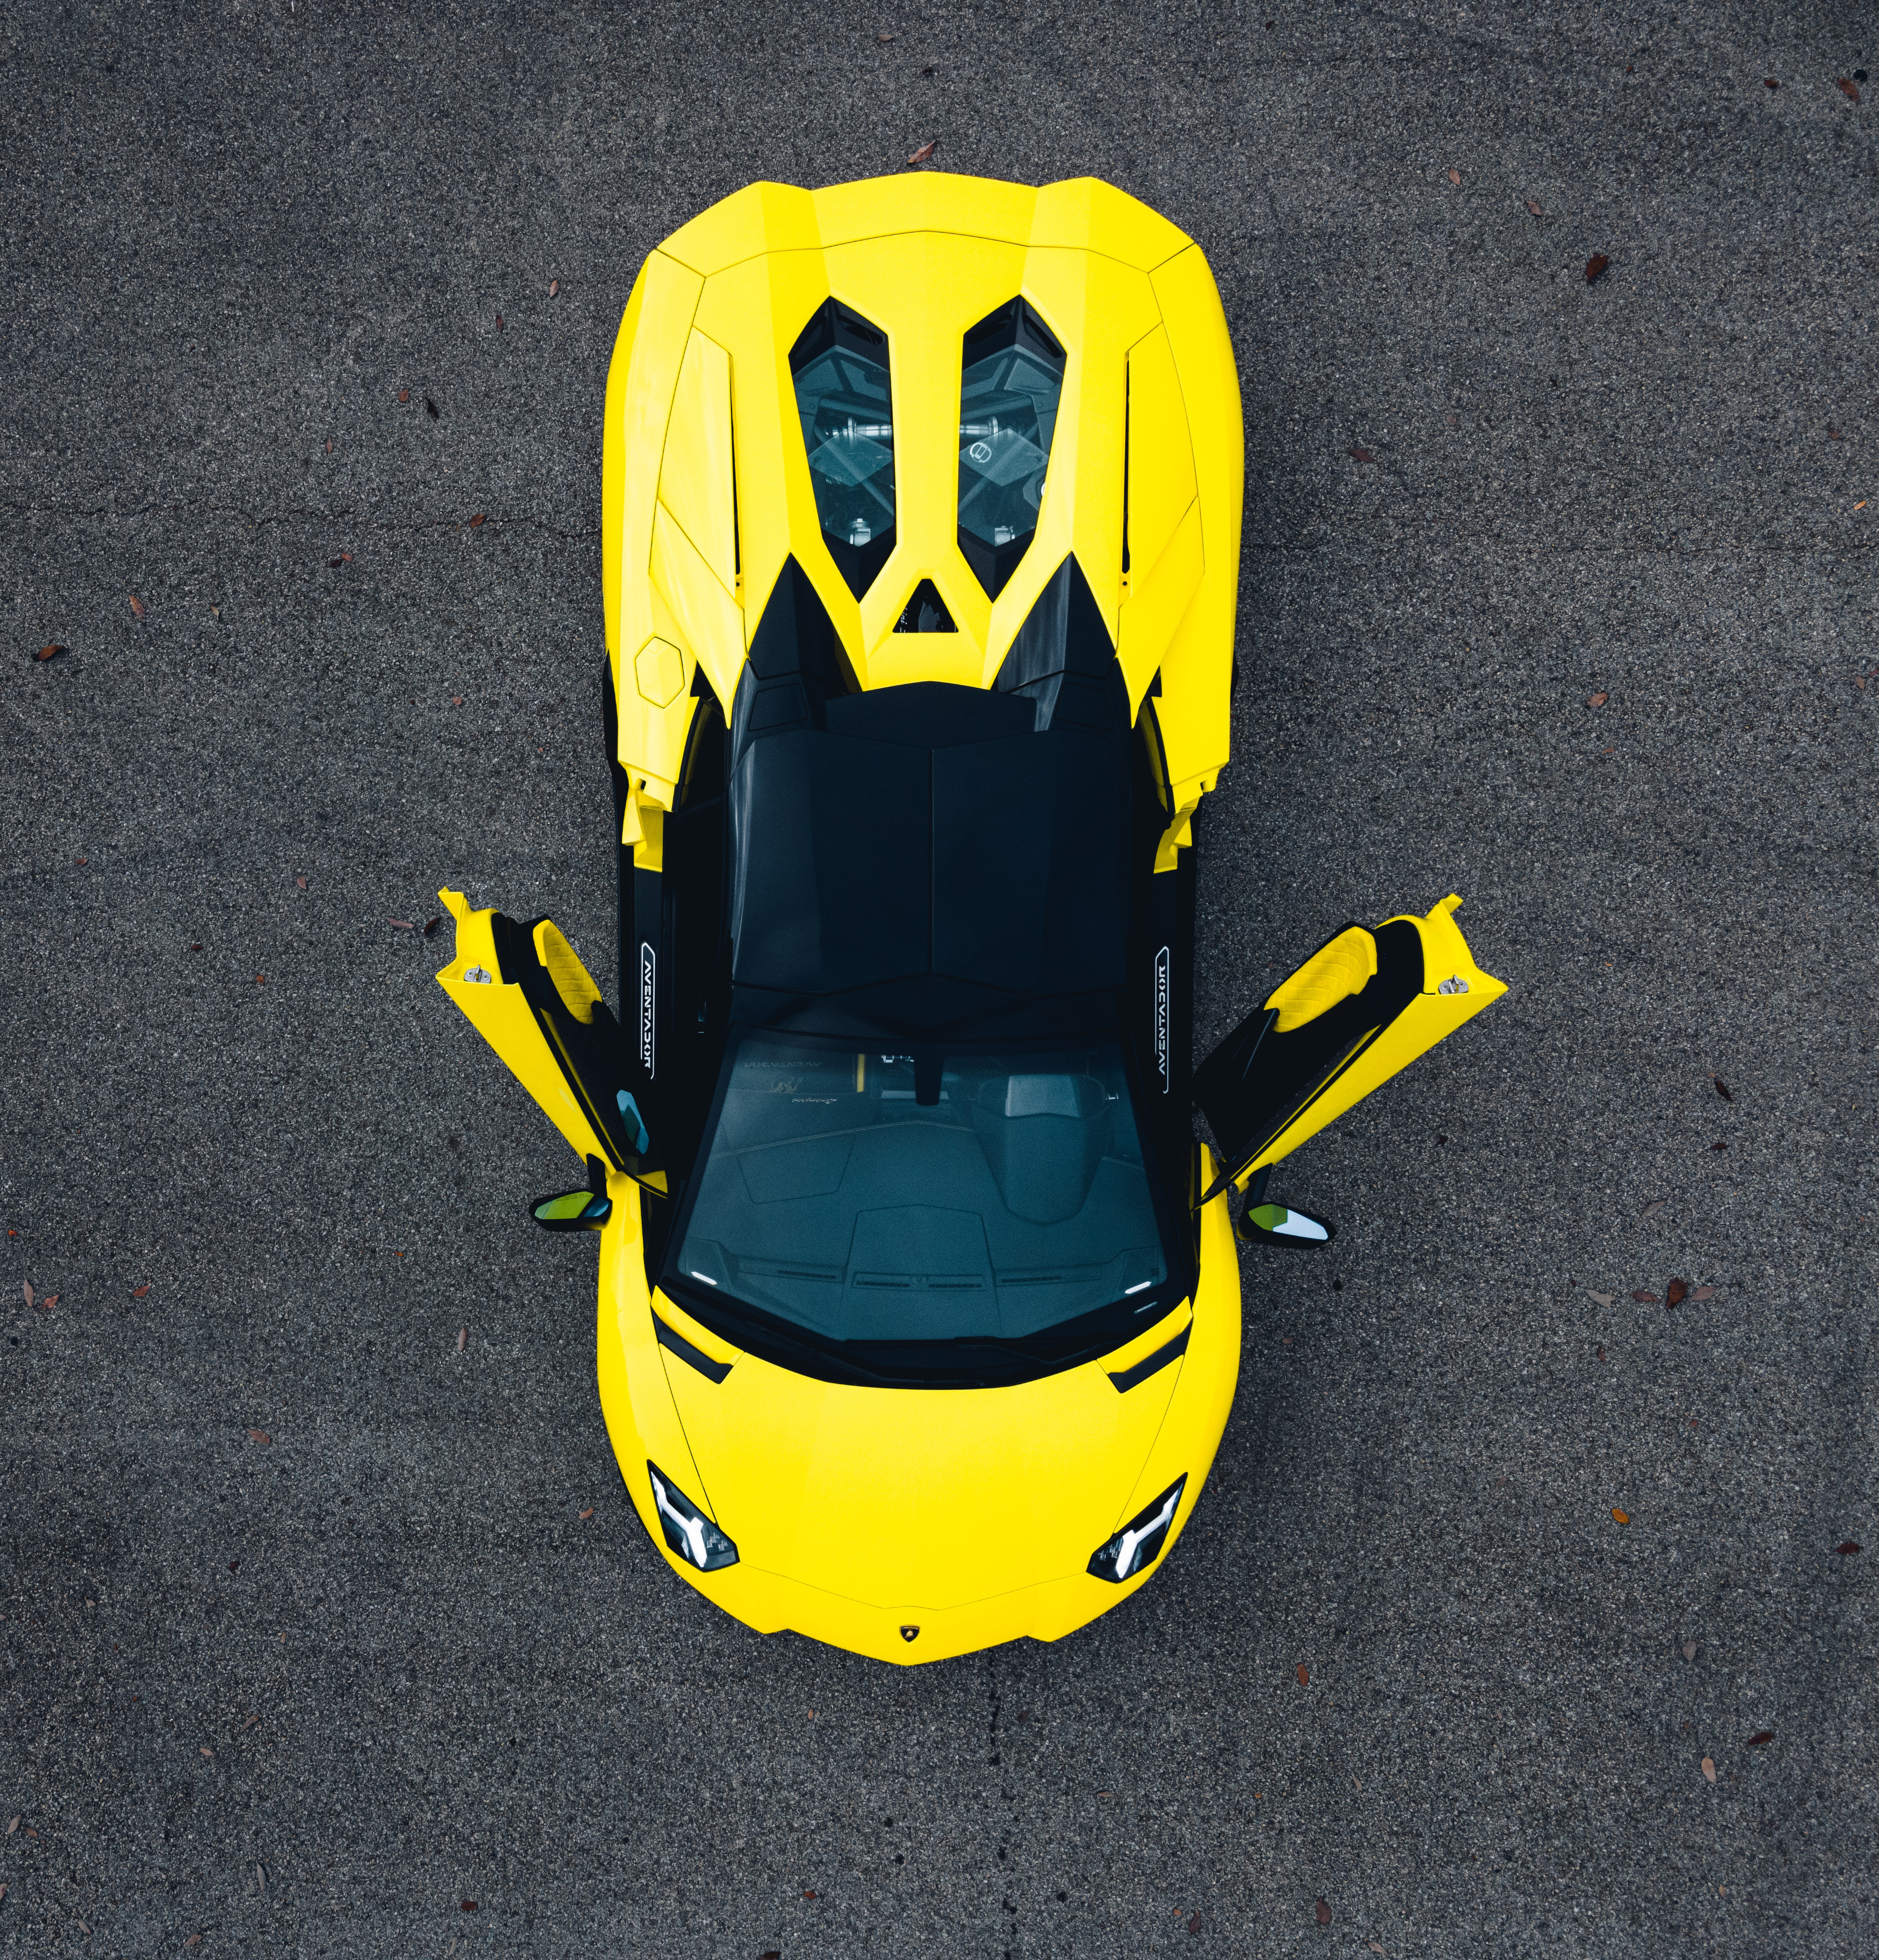 lamborghini aventador, sports, lamborghini, cars, yellow, view from above, car, sports car phone background